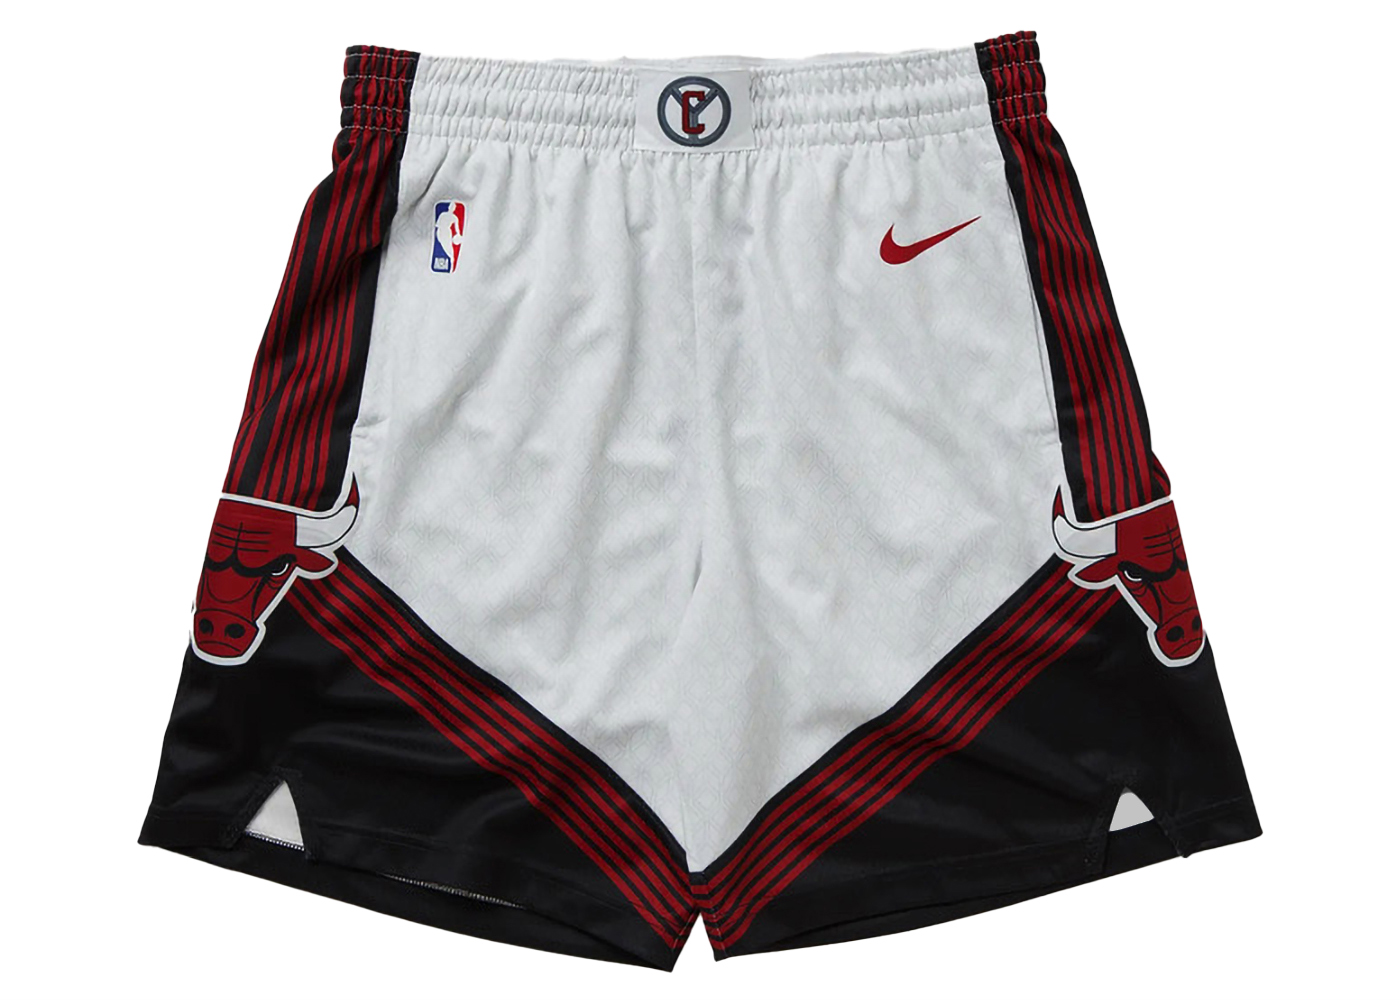 Nike NBA Miami Heat City Edition Mixtape Basketball Shorts Black